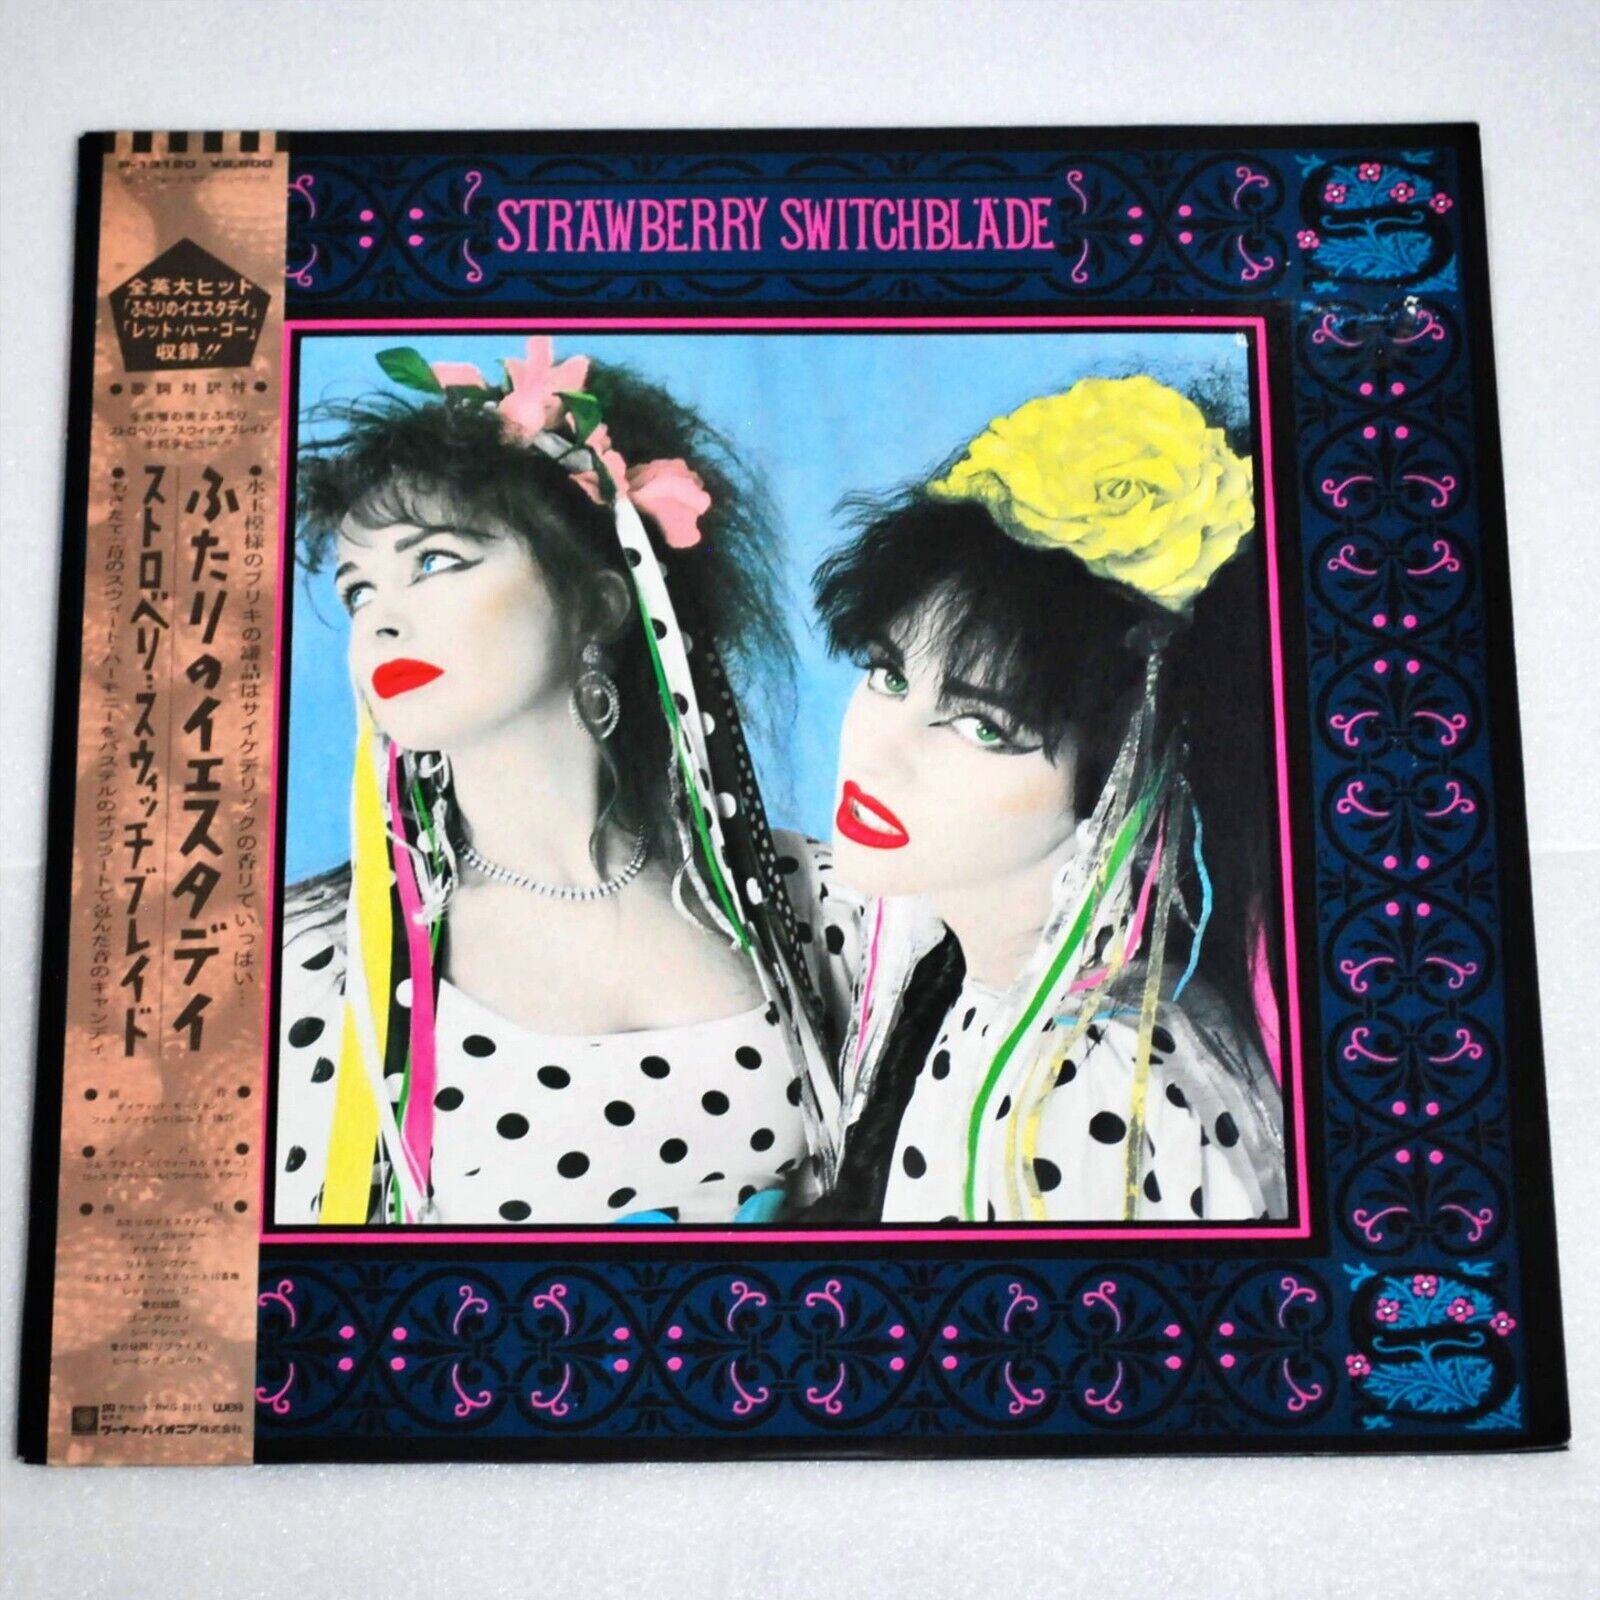 Strawberry Switchblade Vinyl Record Obi 1985 Pop New Wave Punk Rock Music Japan